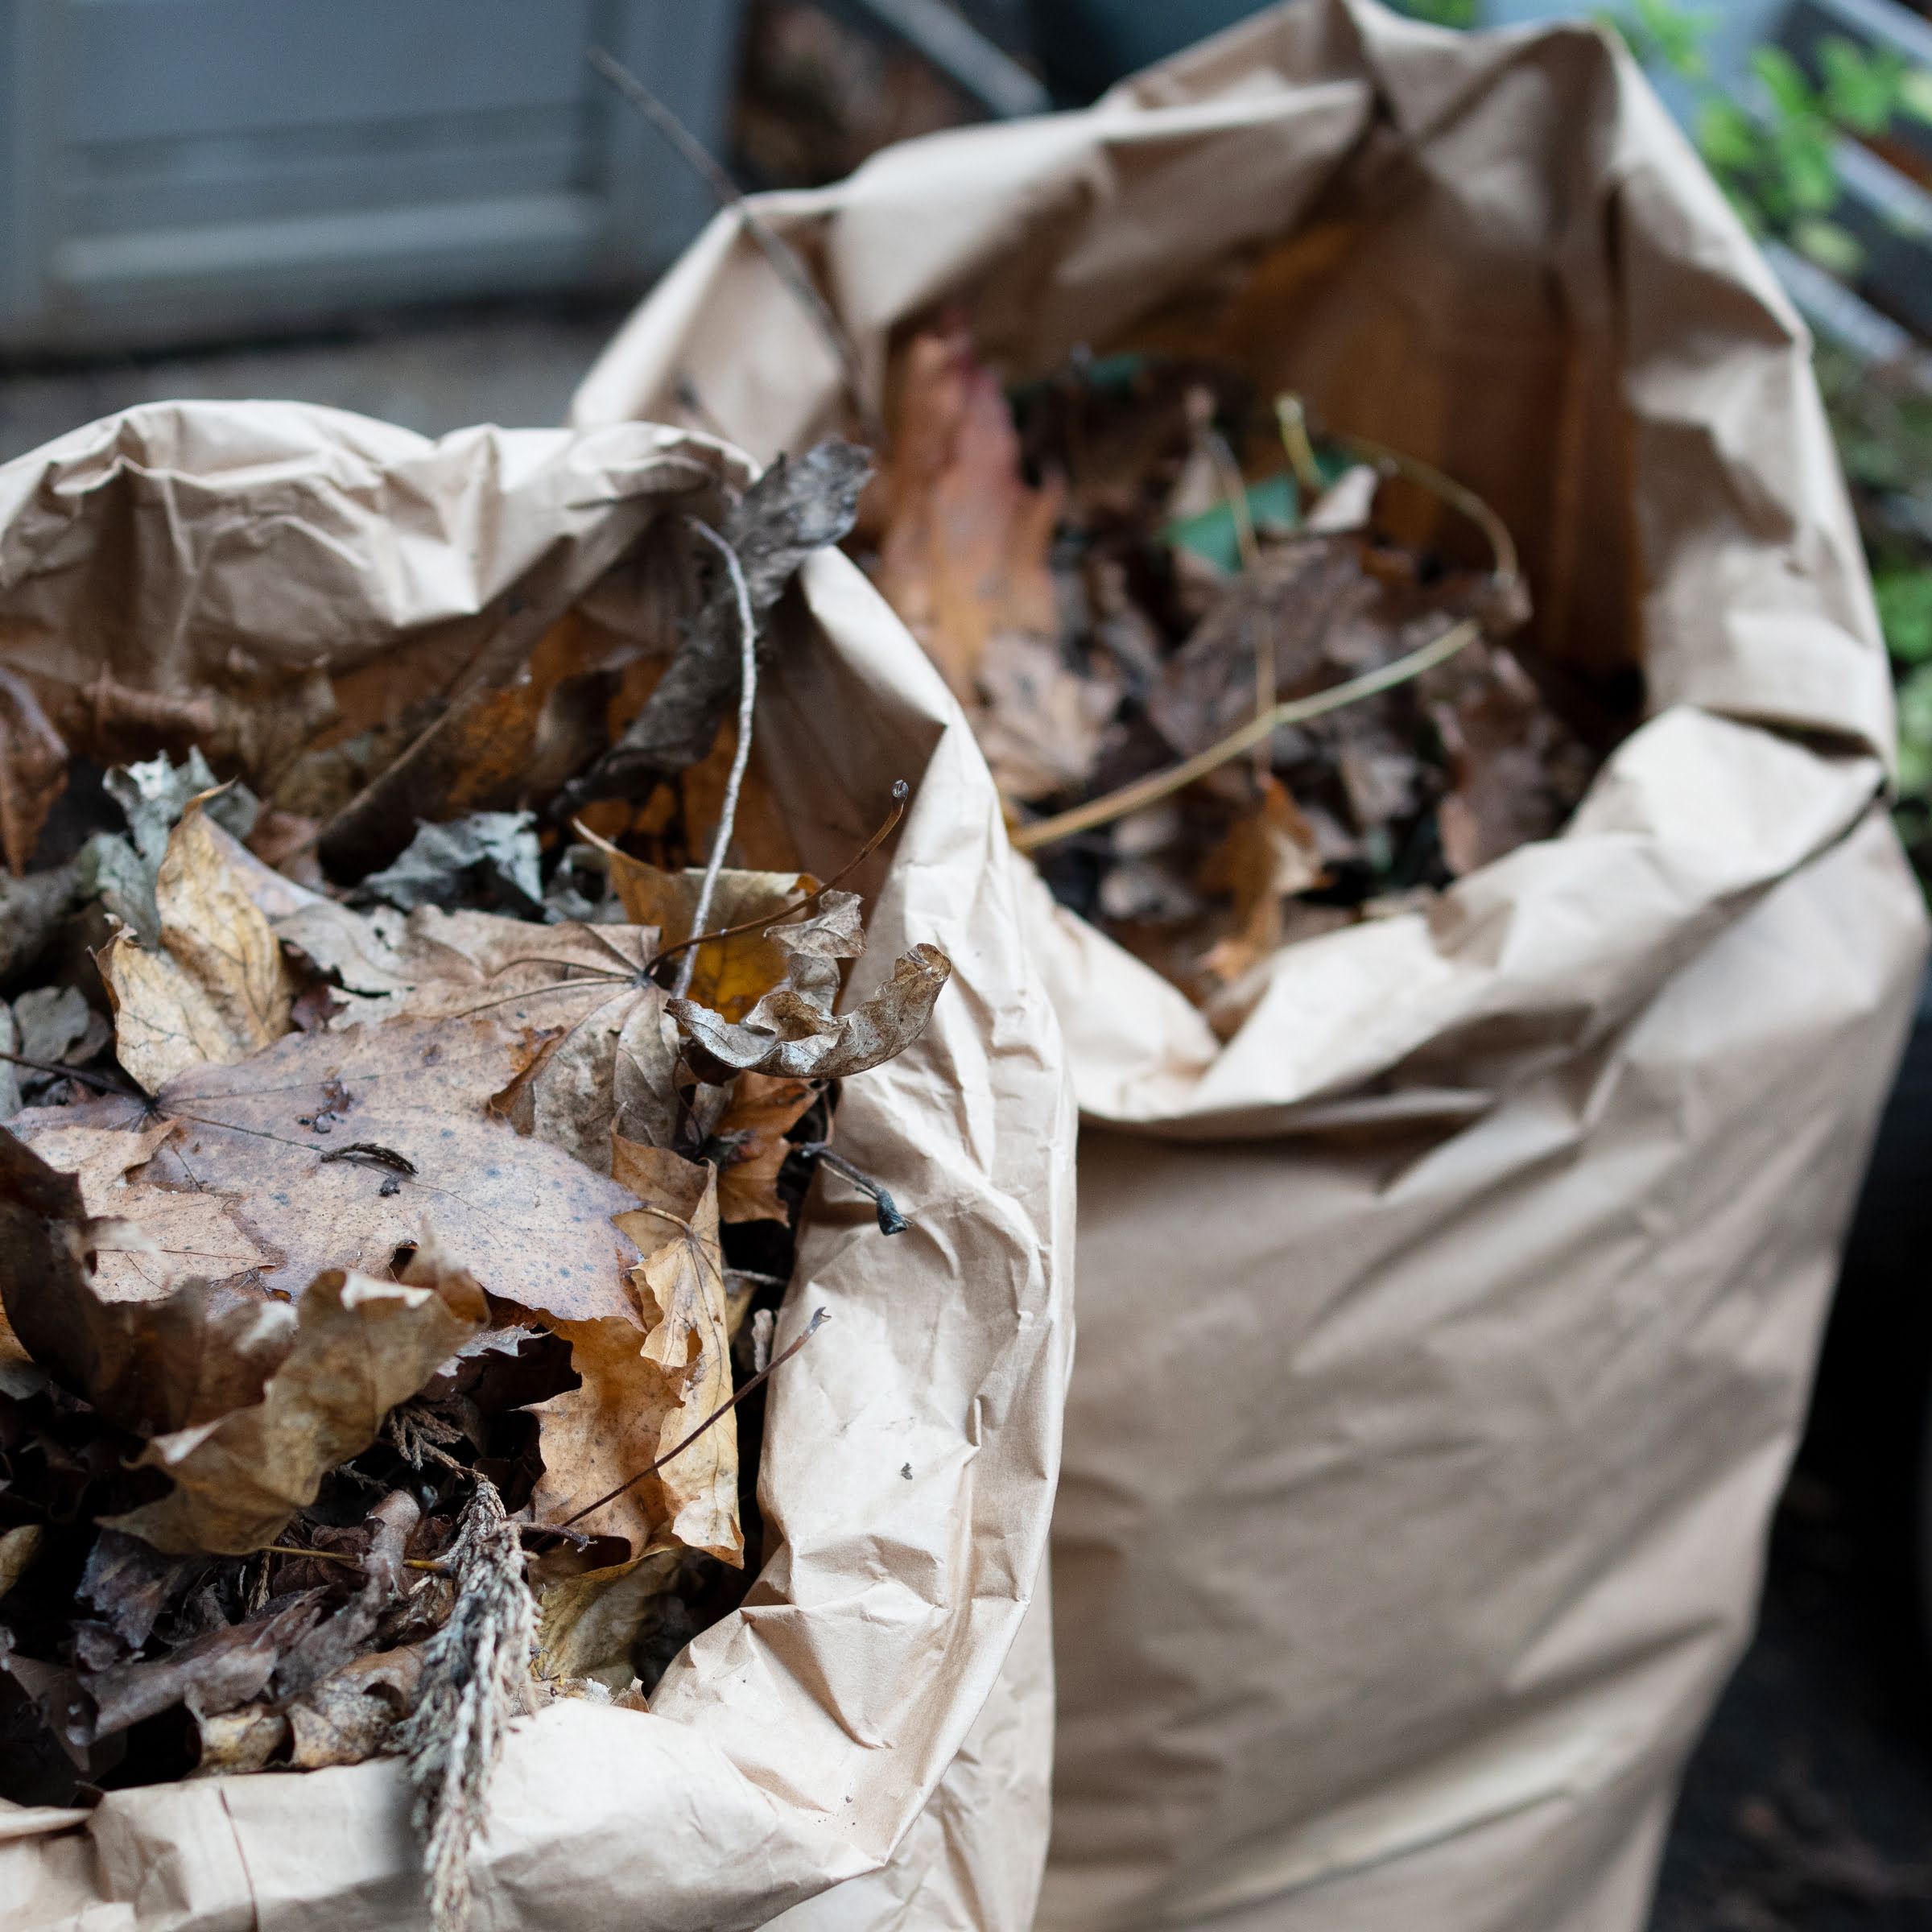 St Helens Pop Up Garden Waste Bags